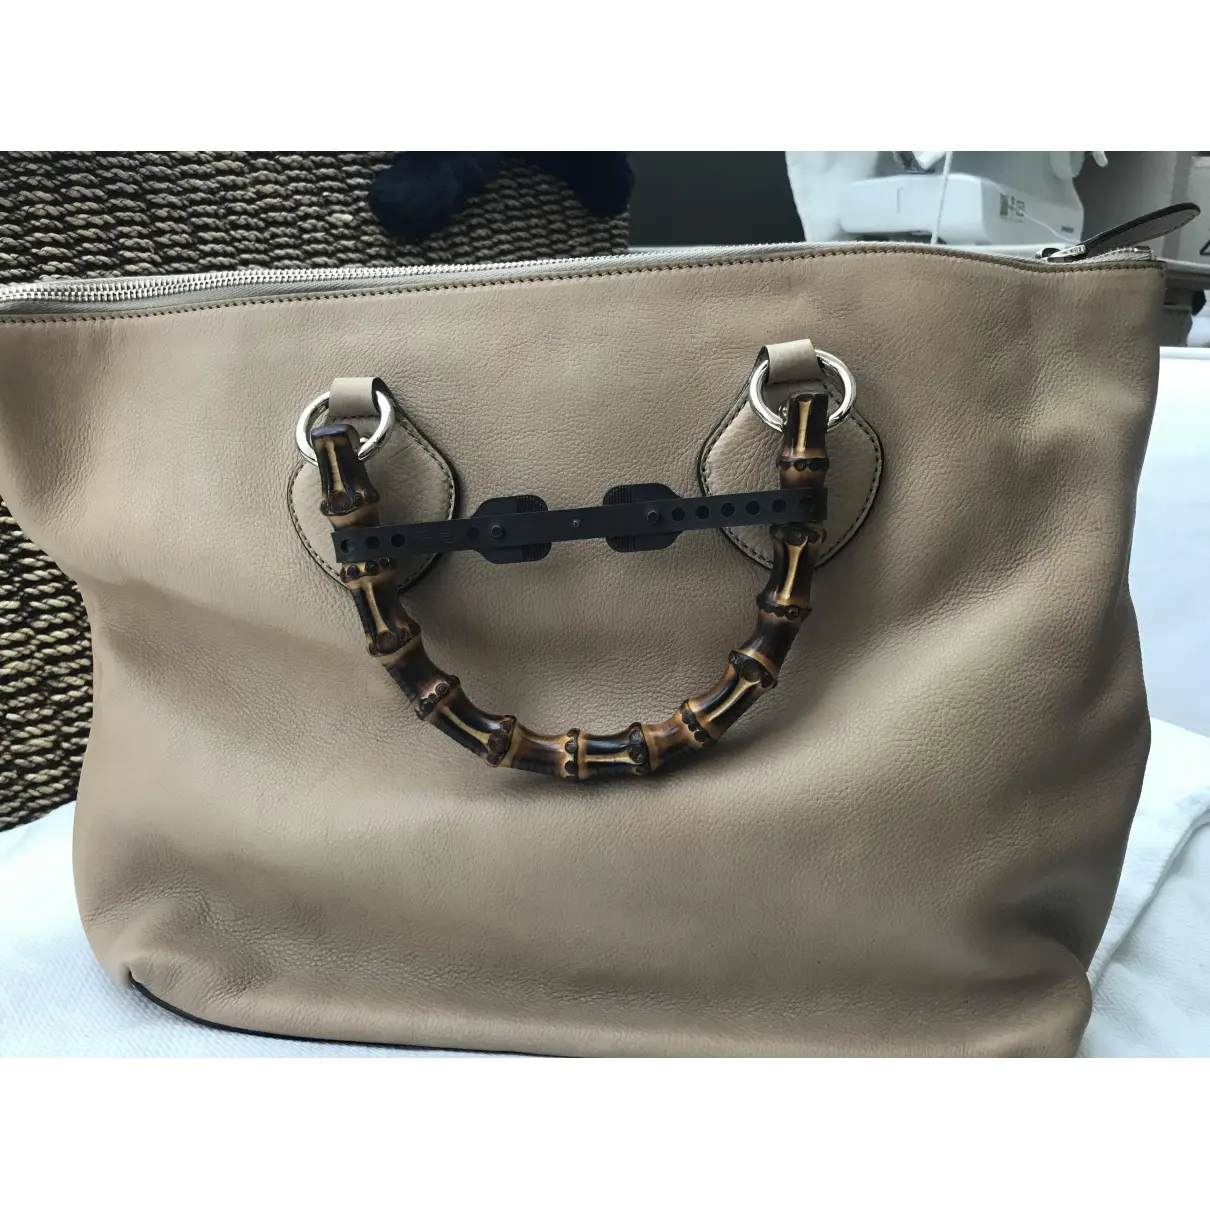 Buy Gucci Bamboo leather handbag online